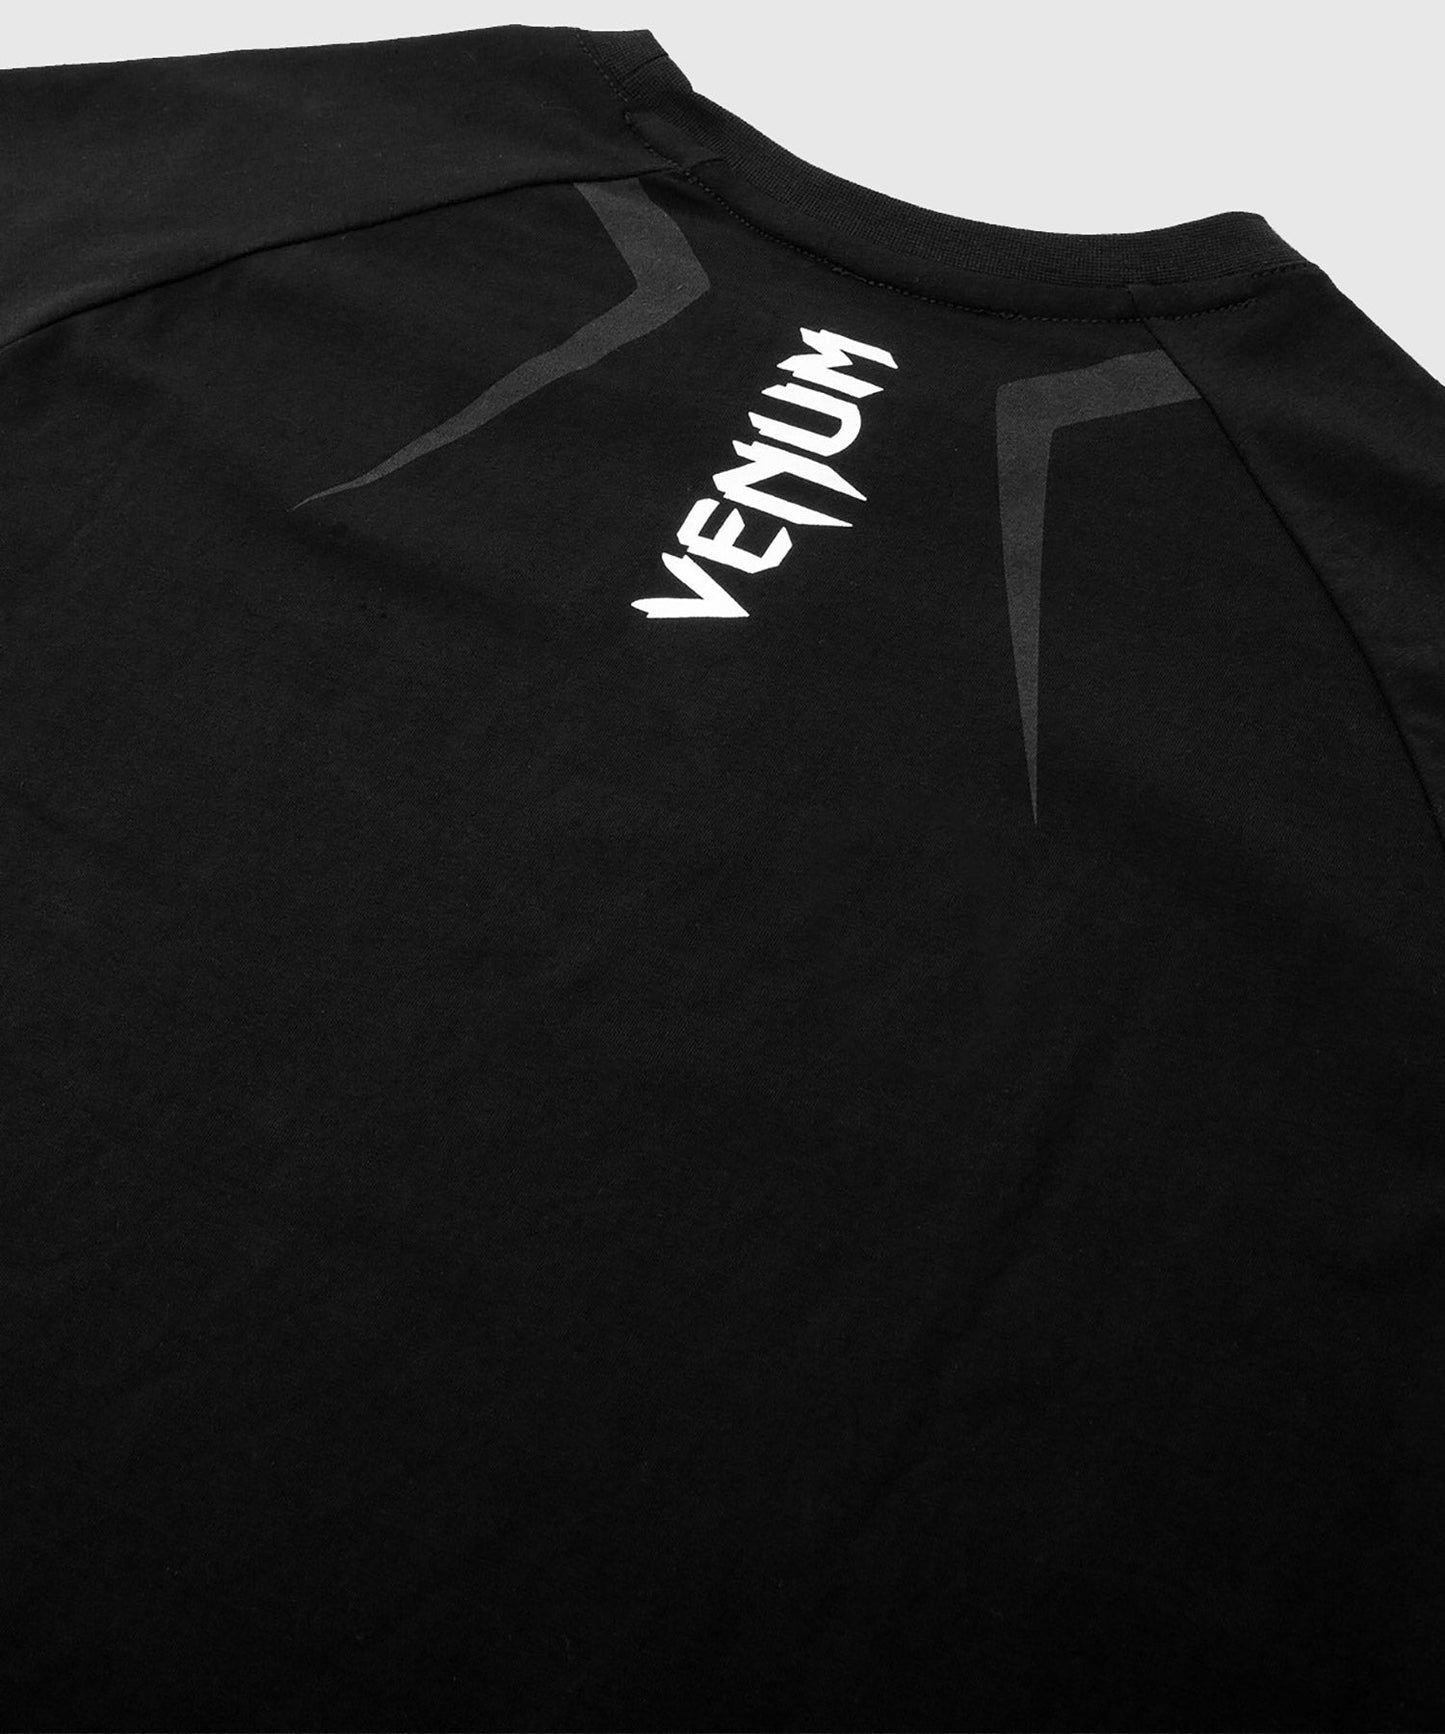 Venum Contender 4.0 T-shirt - Black/Grey-White